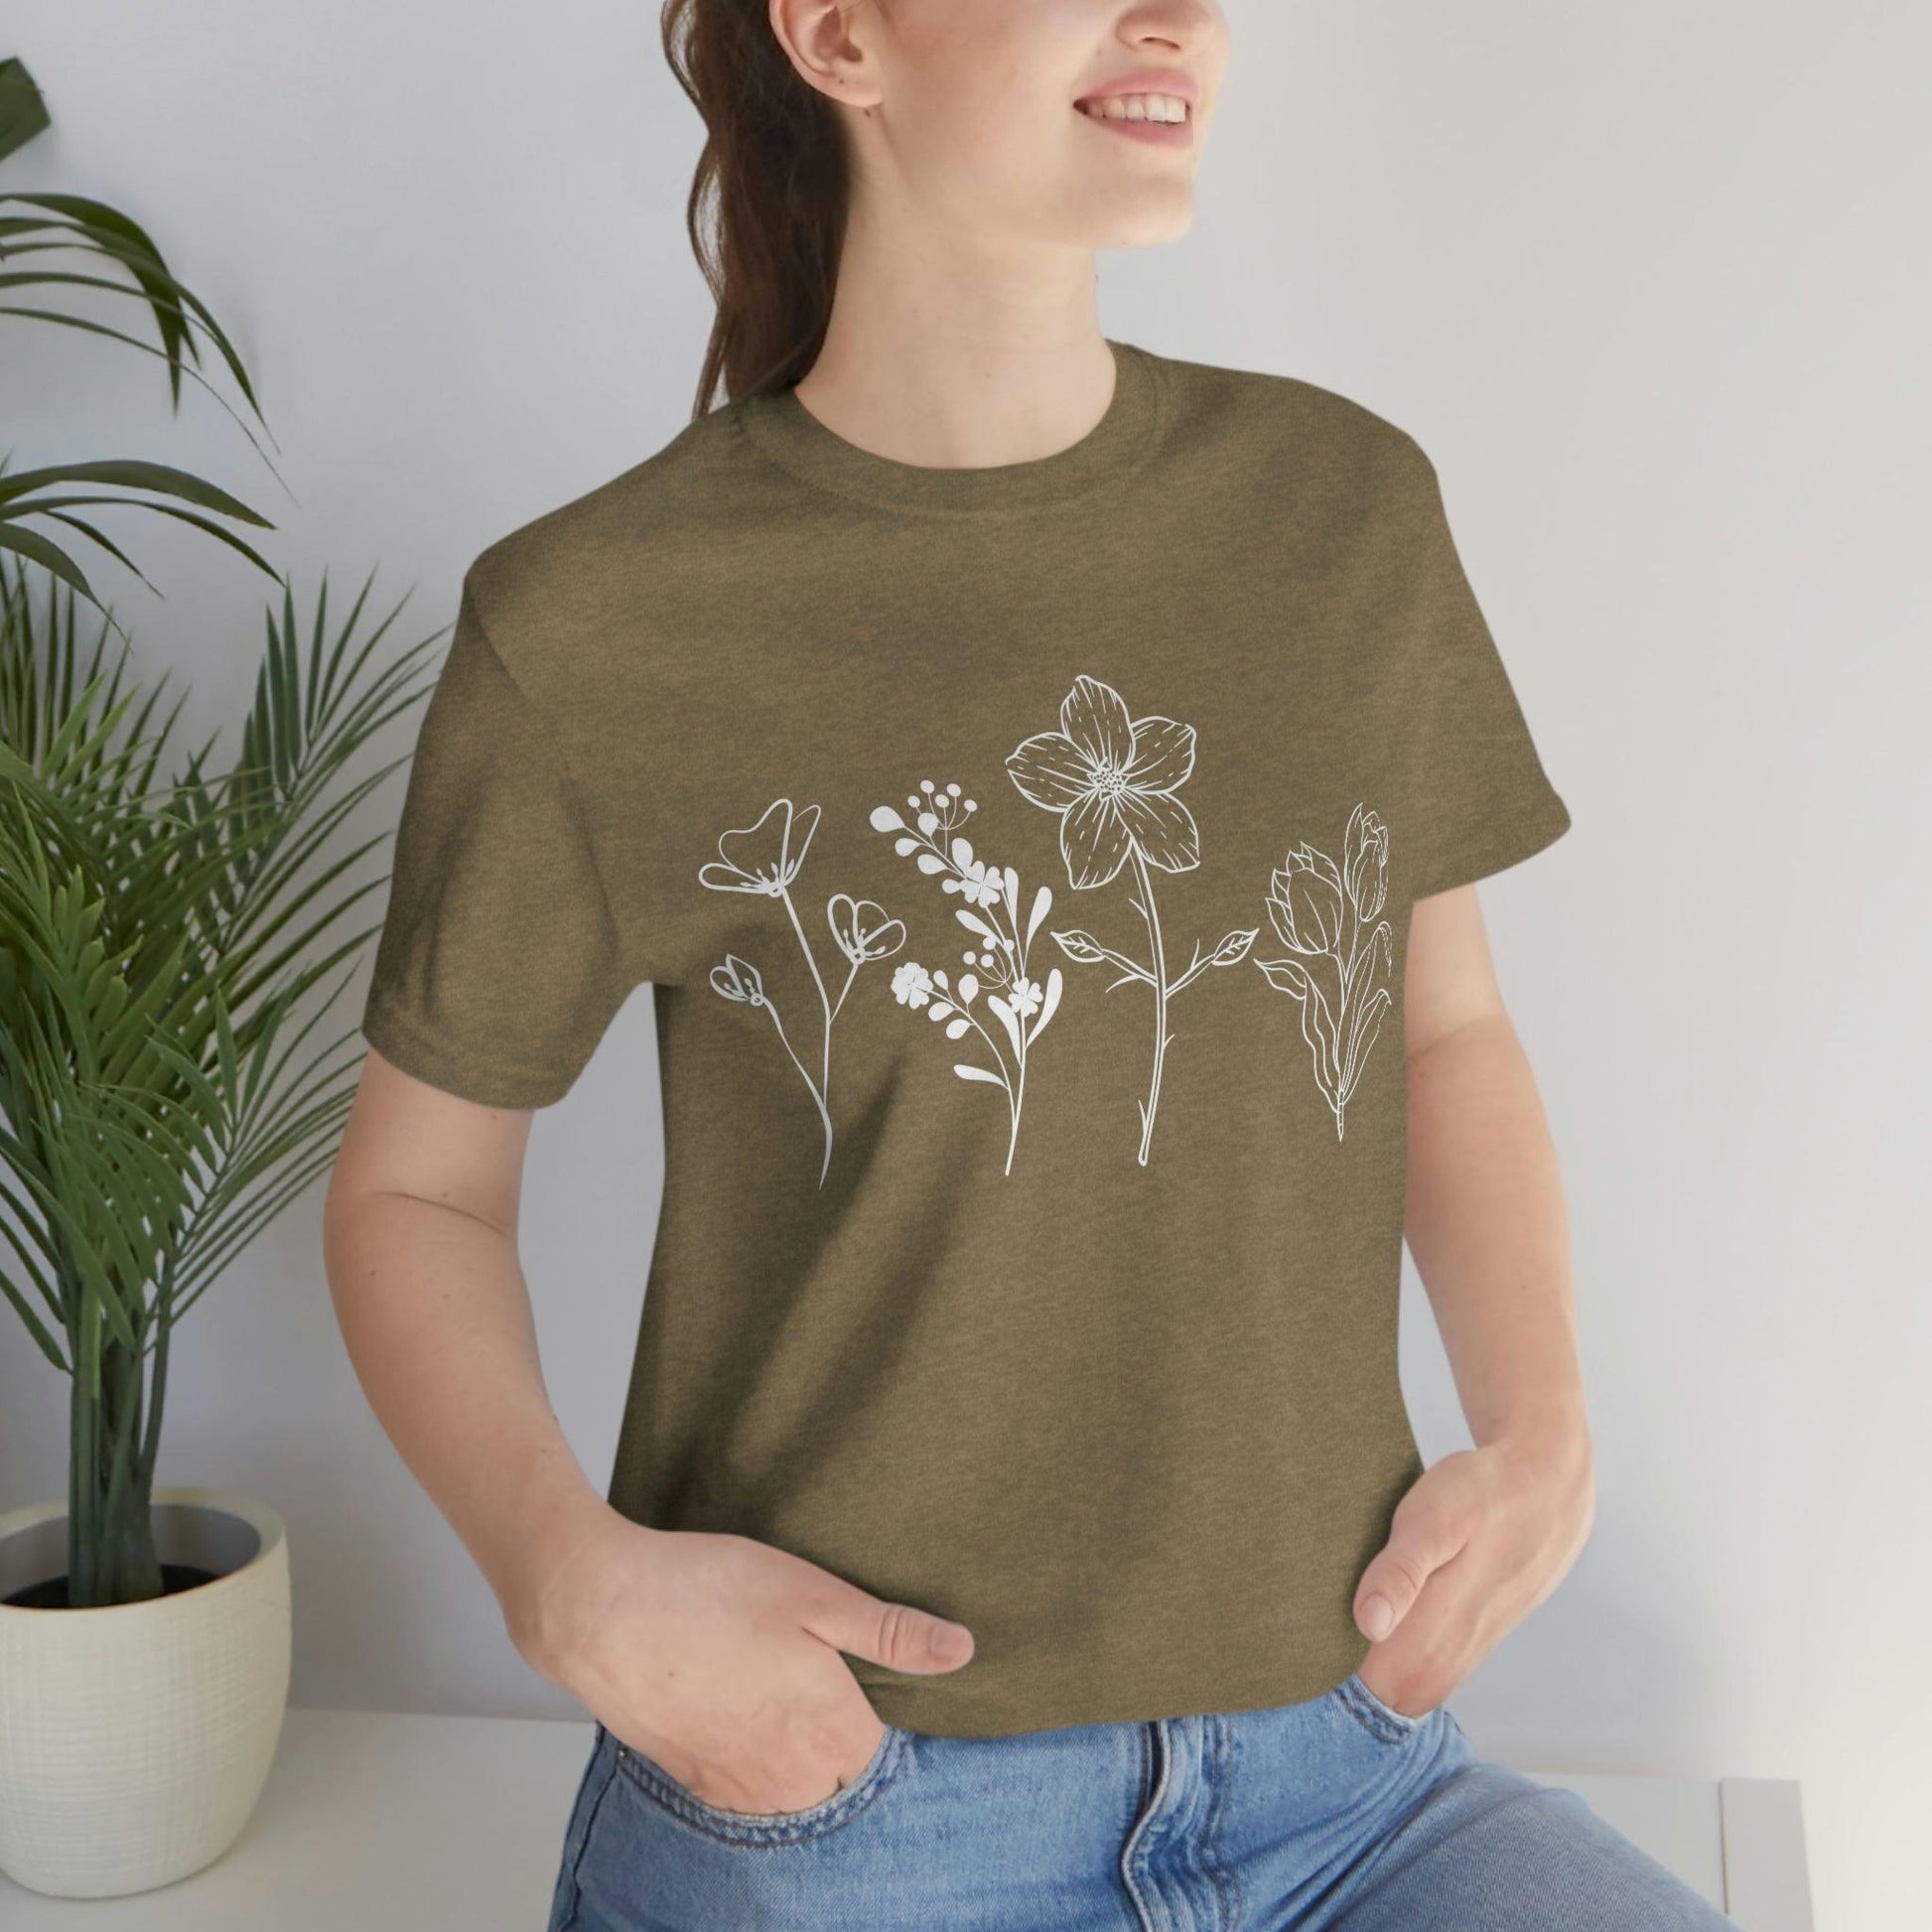 Wildflower shirt - Flower Tshirt - Flower lover shirt - Giftsmojo